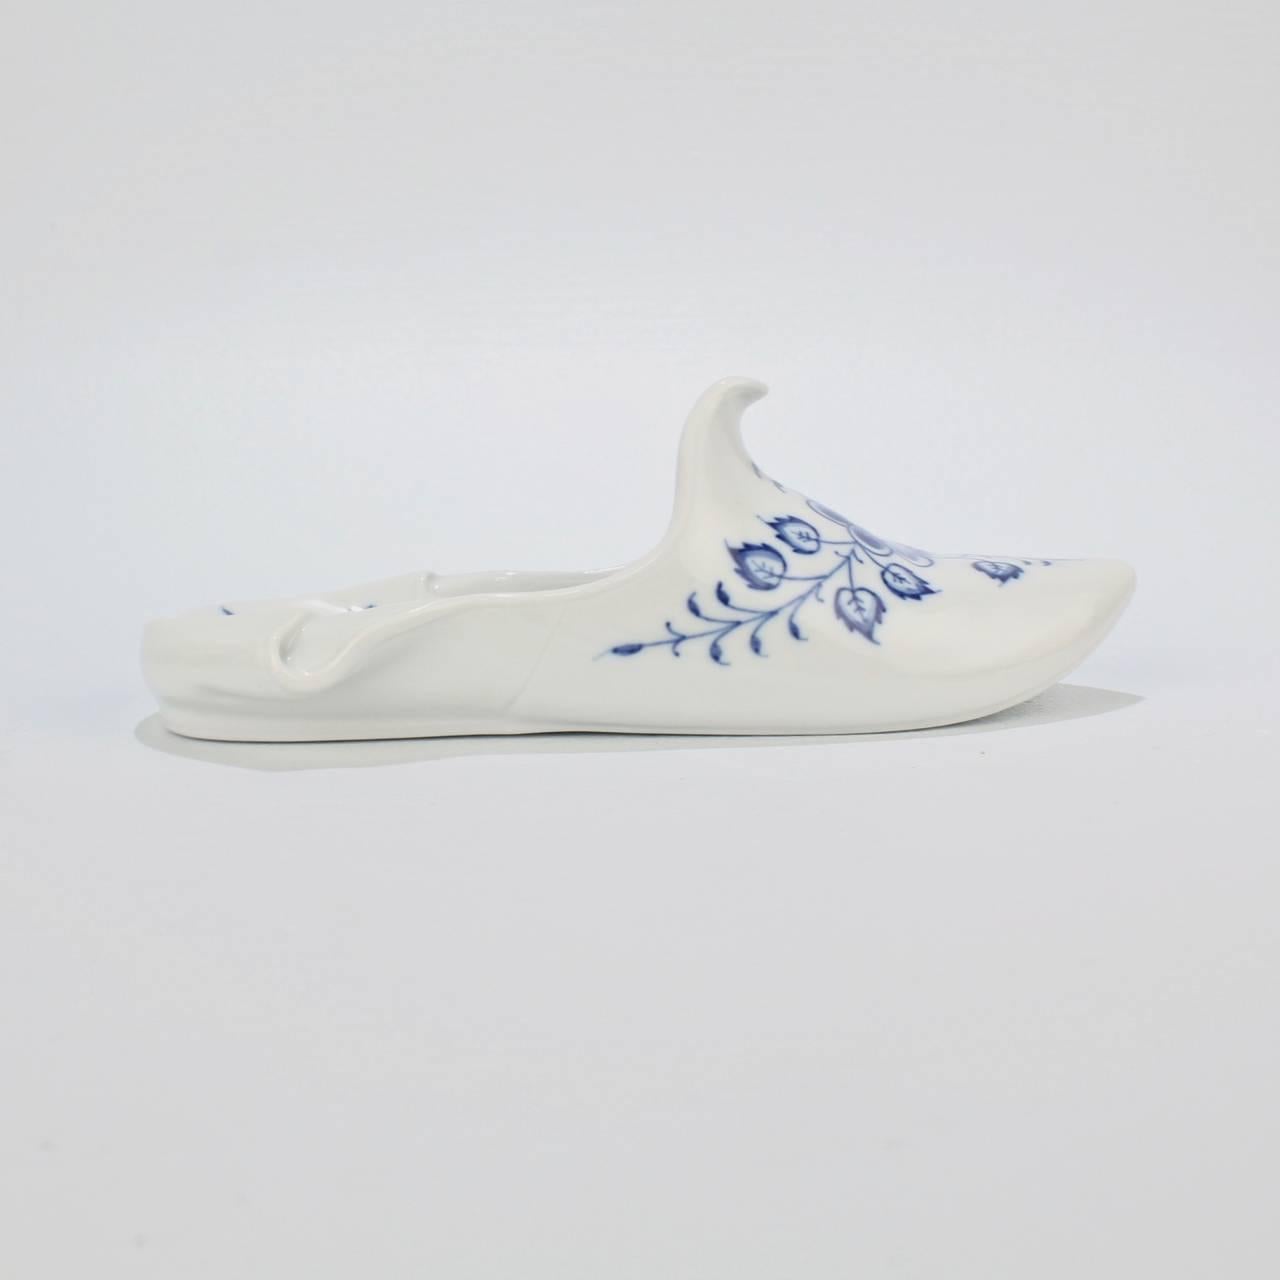 Vintage Meissen Porcelain Blue Onion Pattern Shoe or Slipper Paperweight For Sale 1